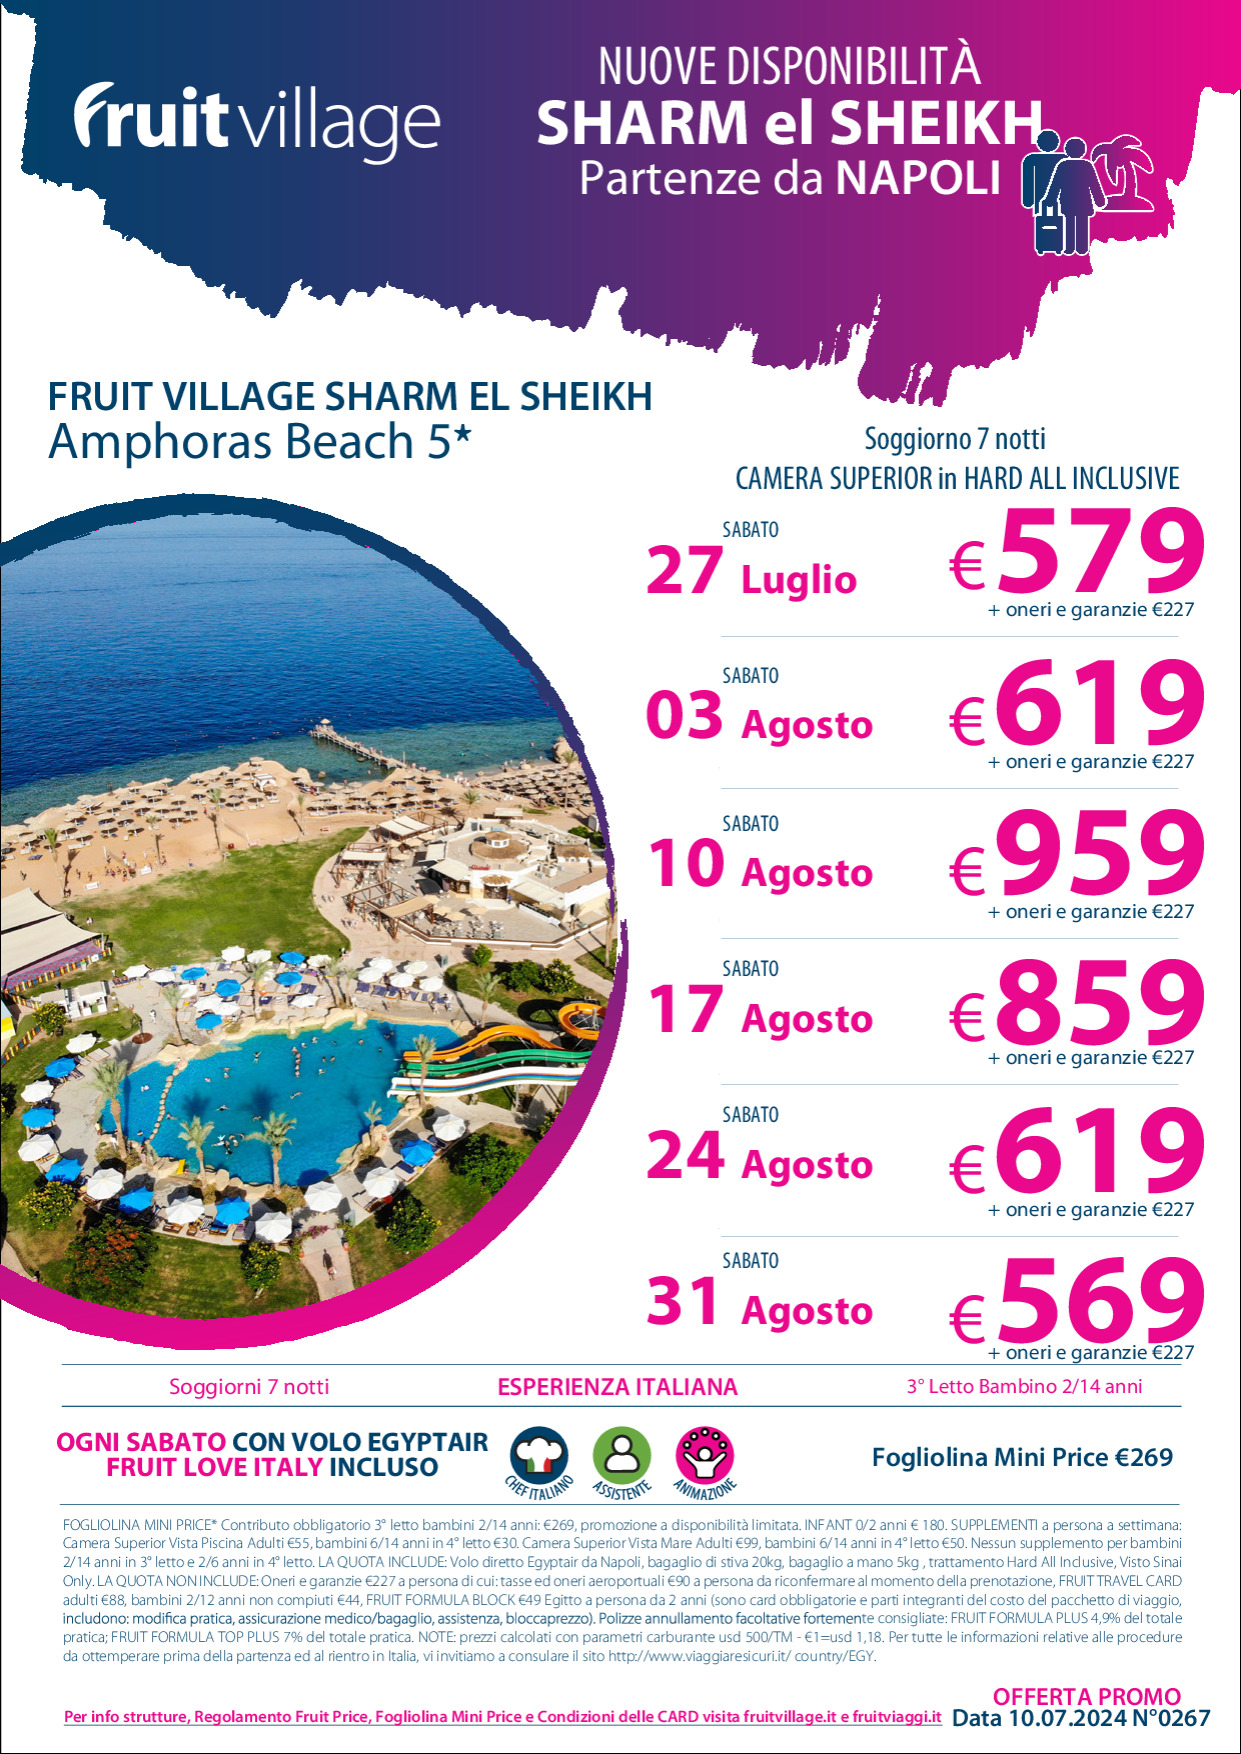 Fruit Village Sharm El Sheikh Amphoras Beach da Napoli il sabato